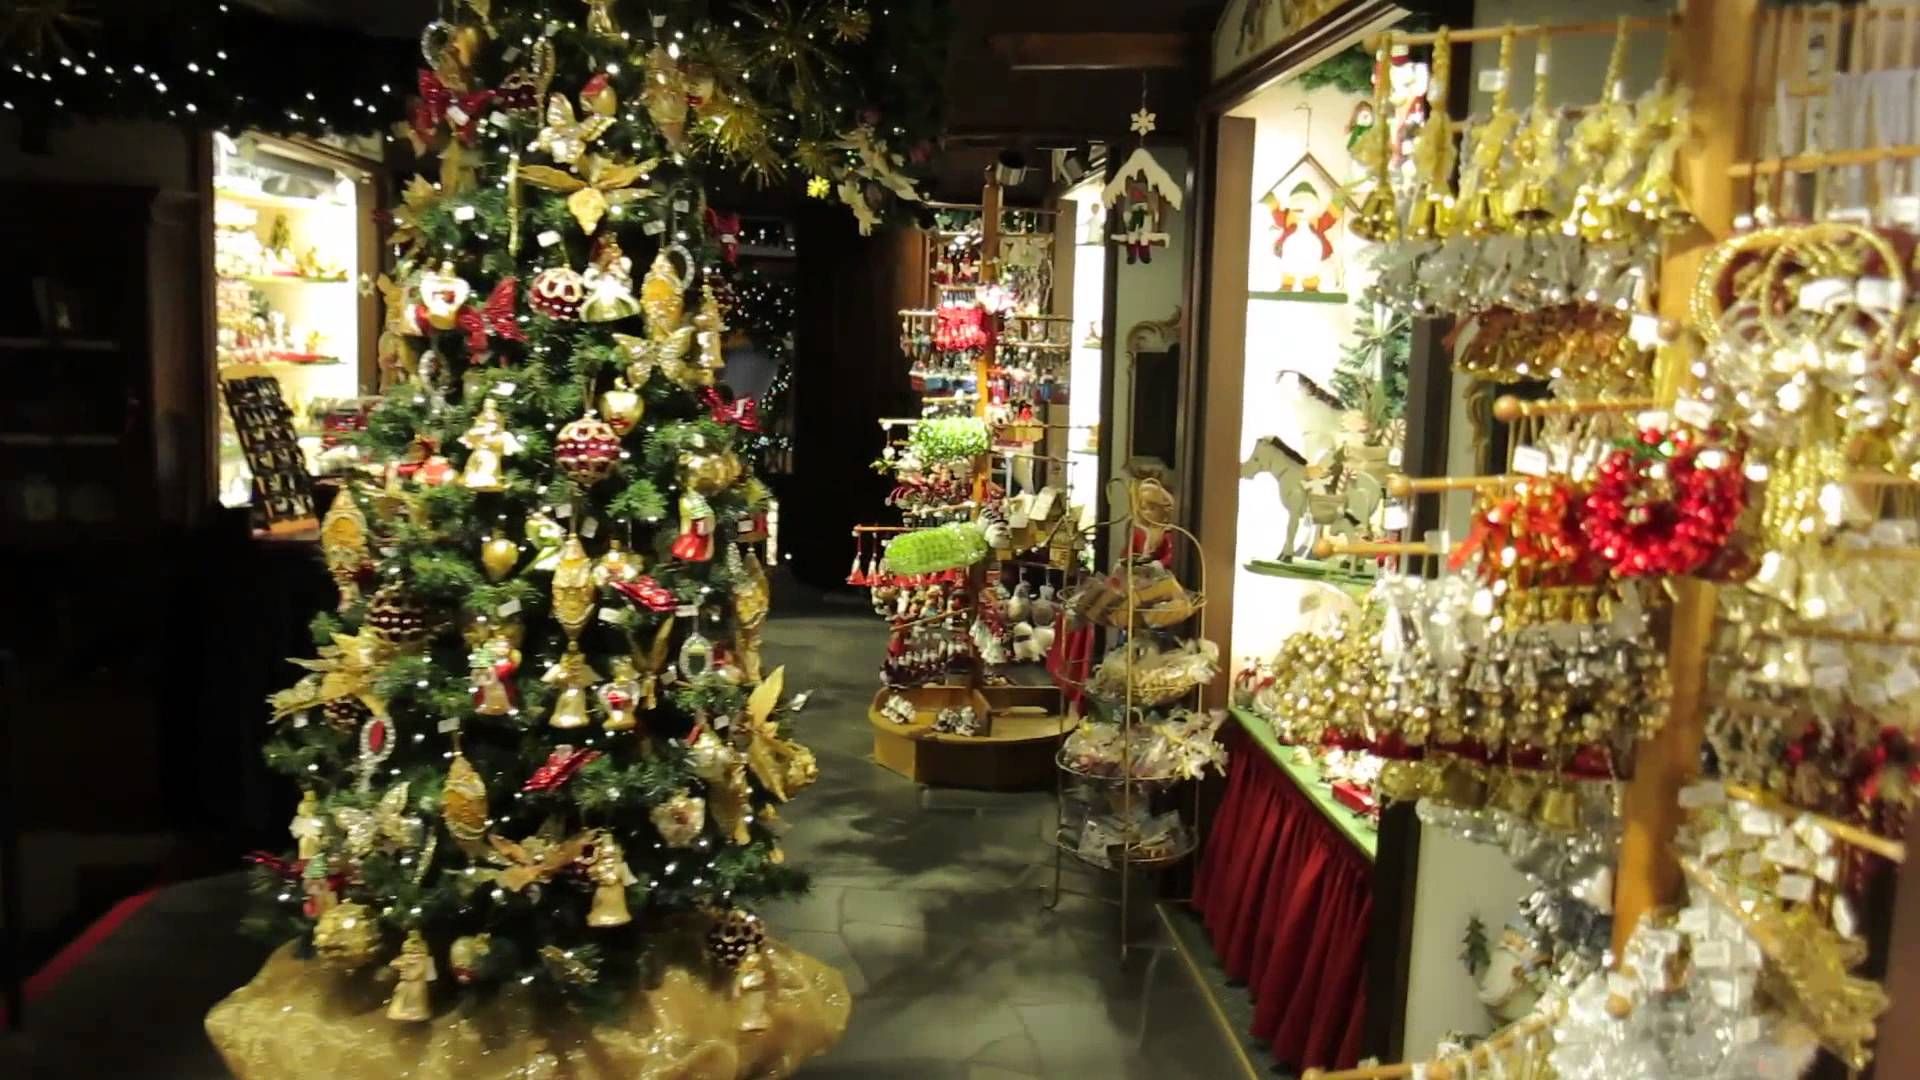 Kathe Wohlfahrt's Christmas shop at Rothenburg - YouTube